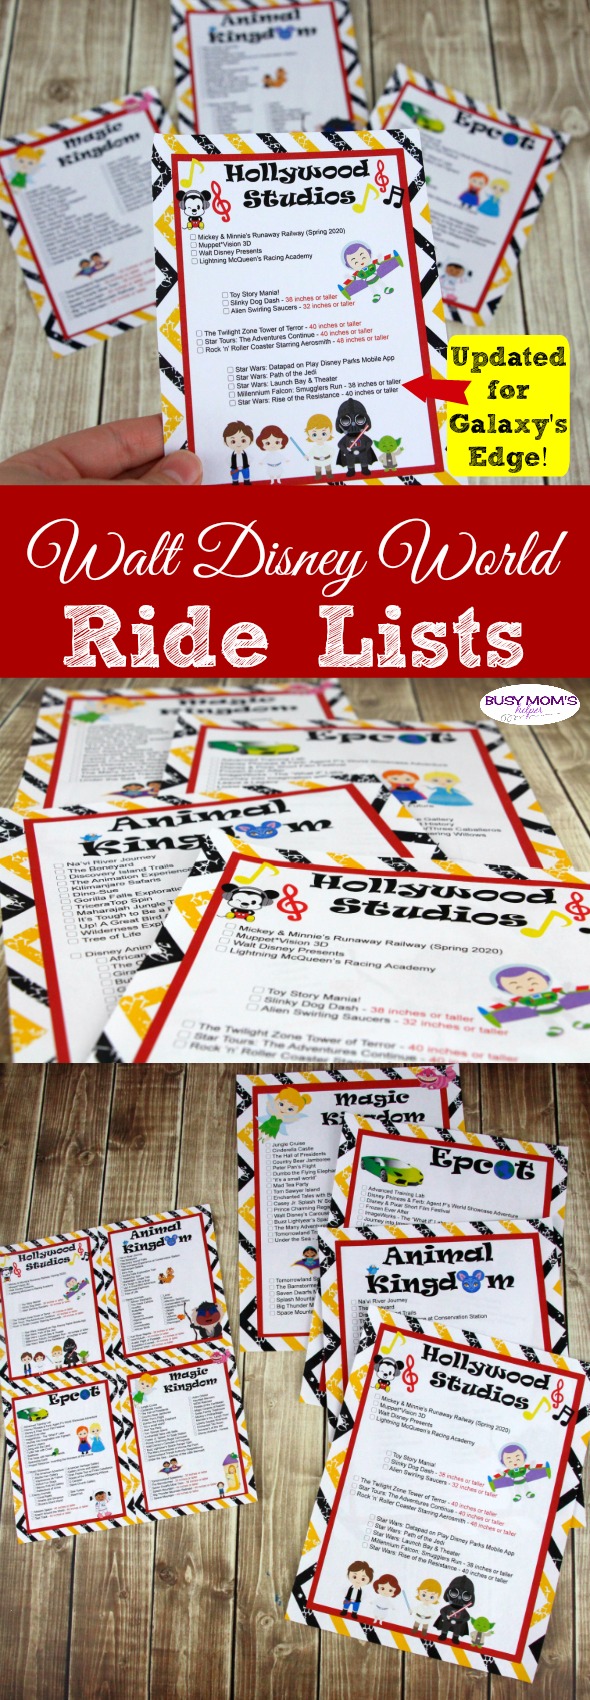 Walt Disney World Ride Lists with Galaxy's Edge